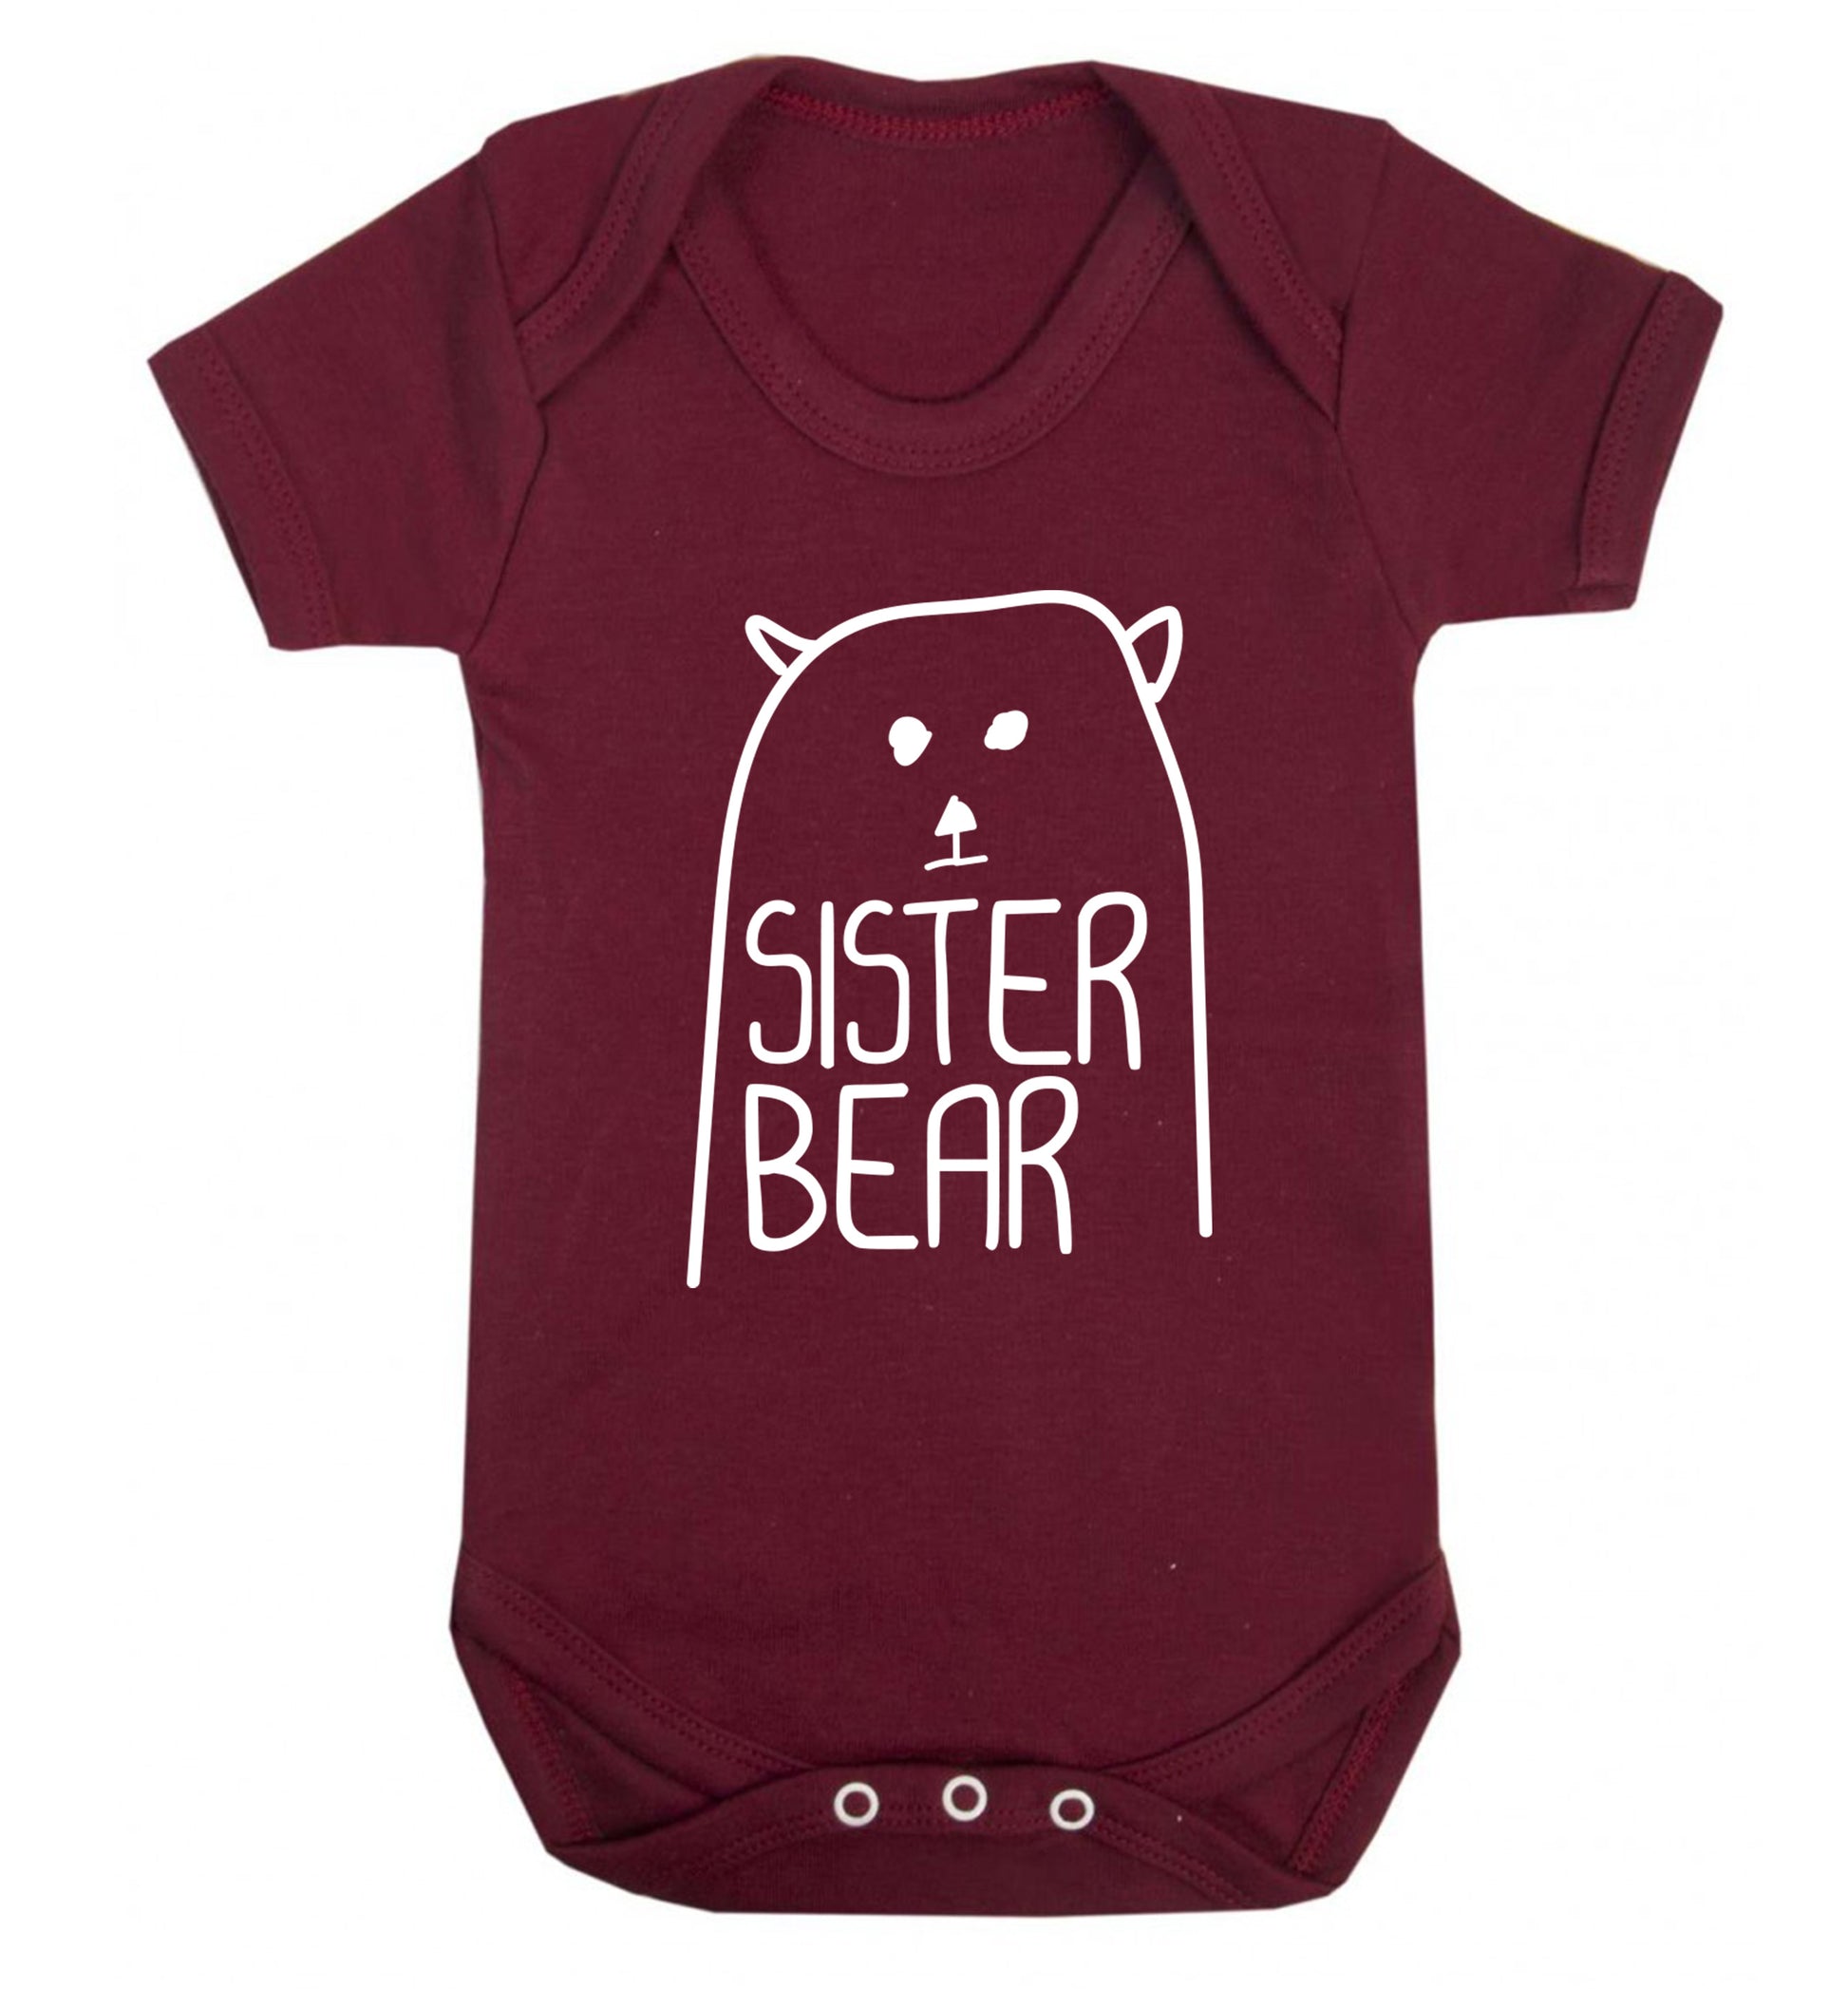 Sister bear Baby Vest maroon 18-24 months